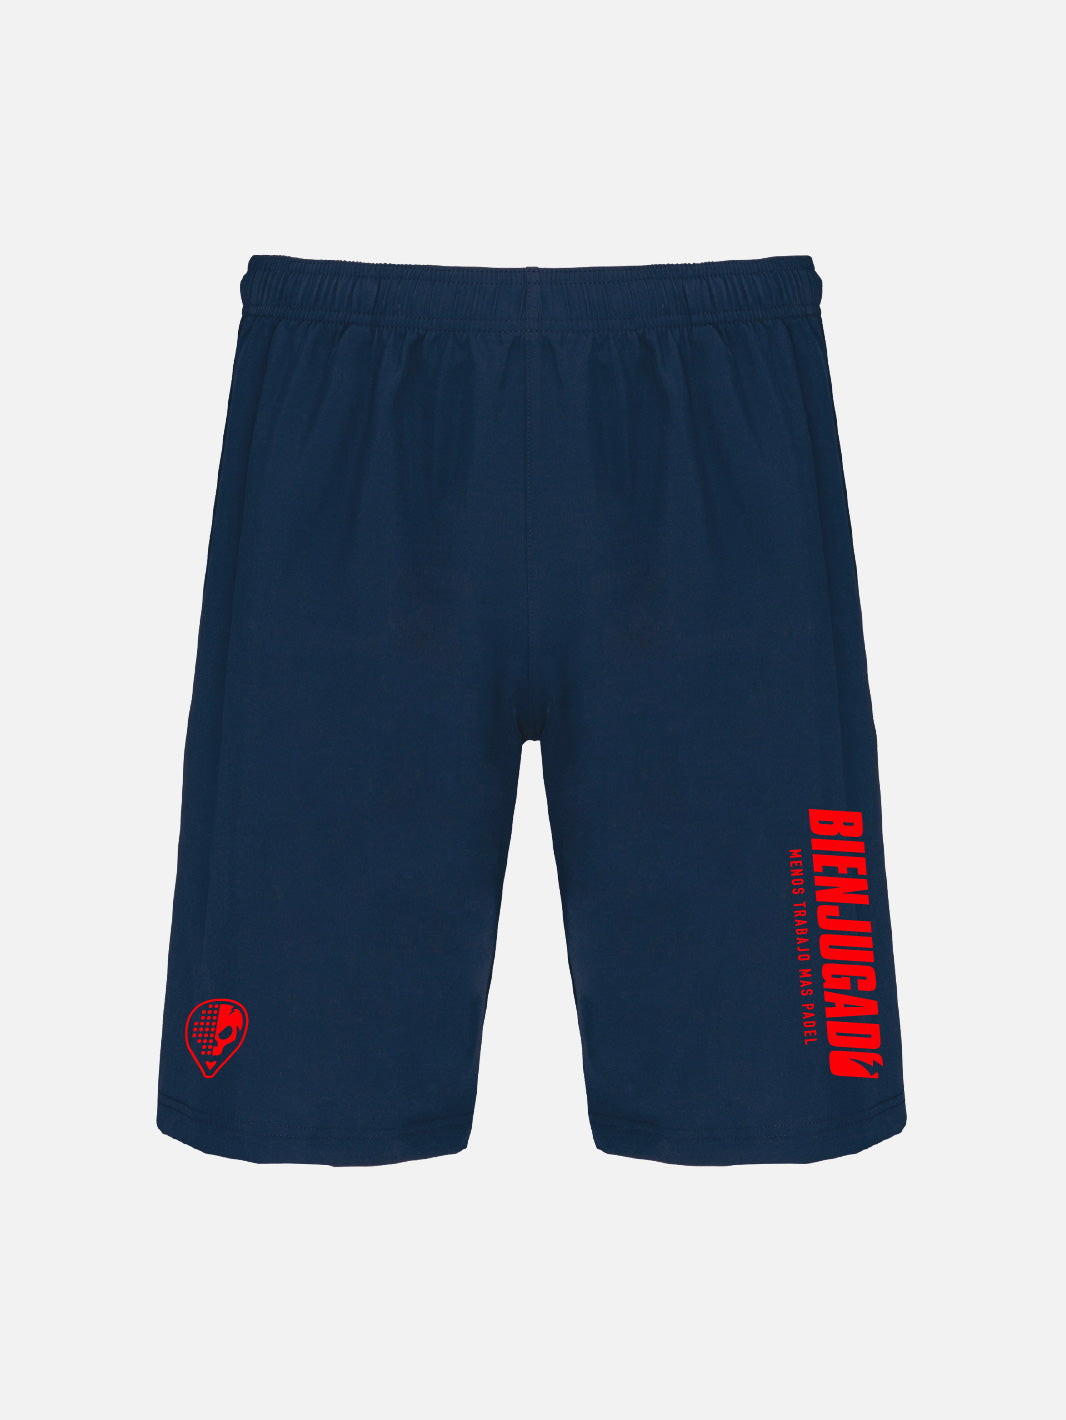 Men's Shorts - Navy